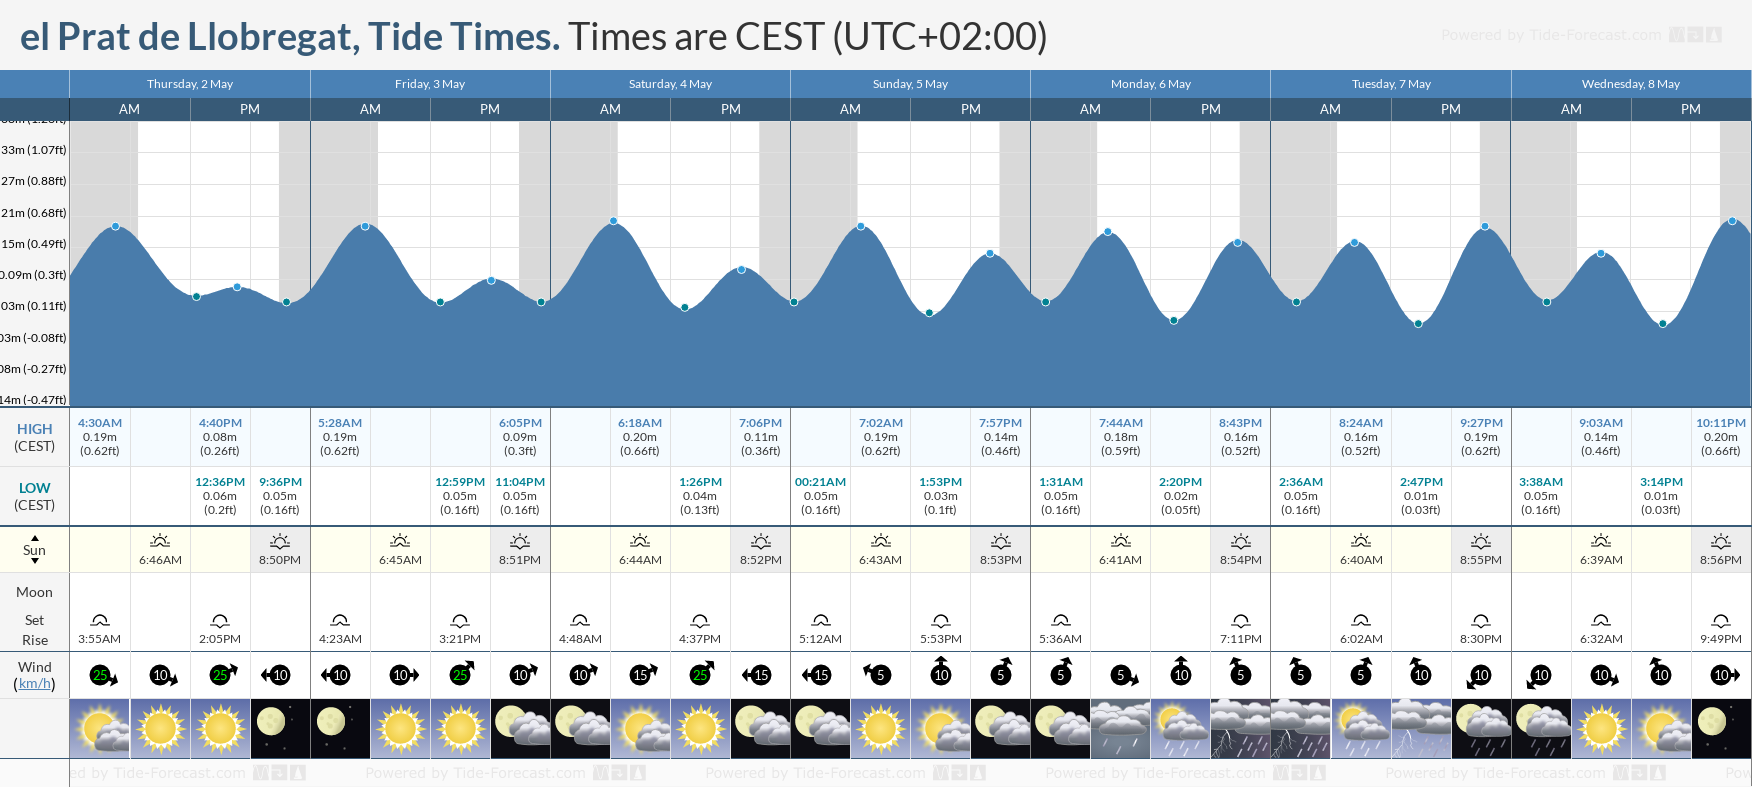 el Prat de Llobregat Tide Chart including high and low tide tide times for the next 7 days